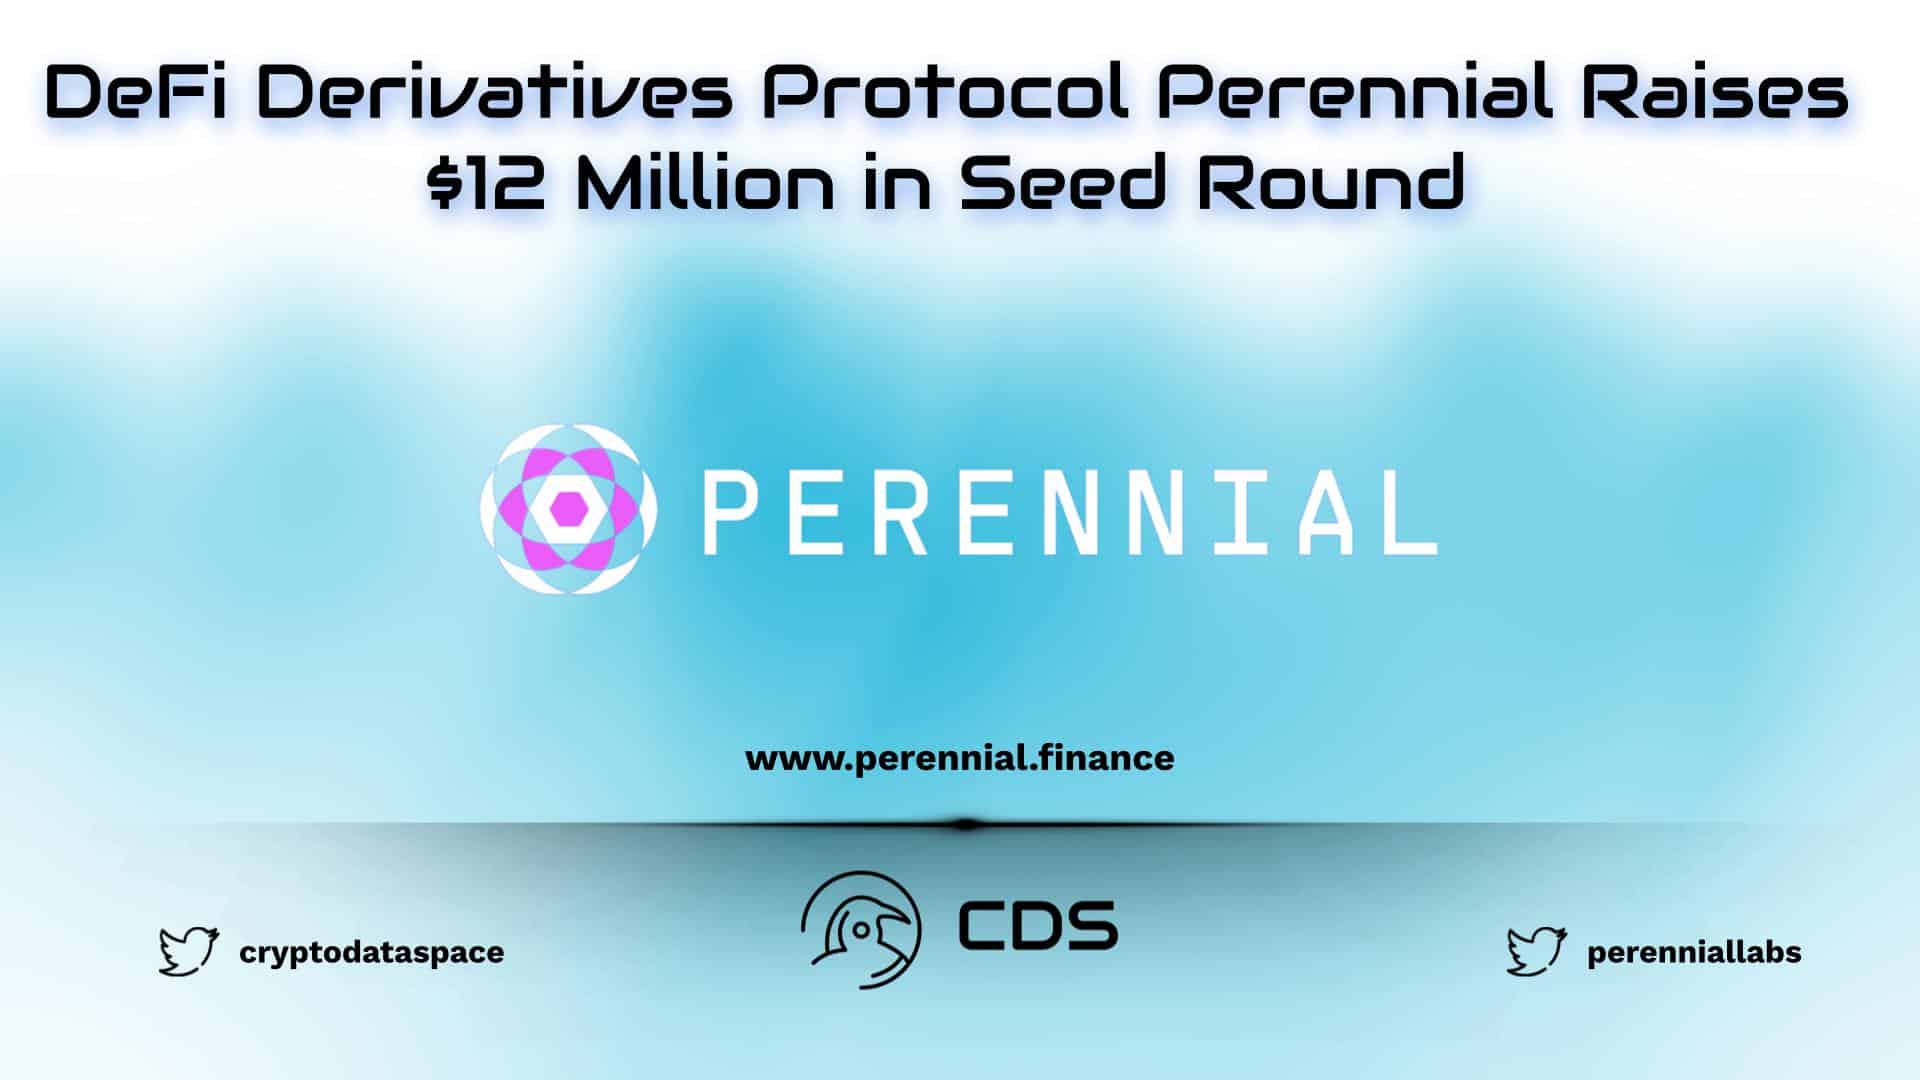 DeFi Derivatives Protocol Perennial Raises $12 Million in Seed Round